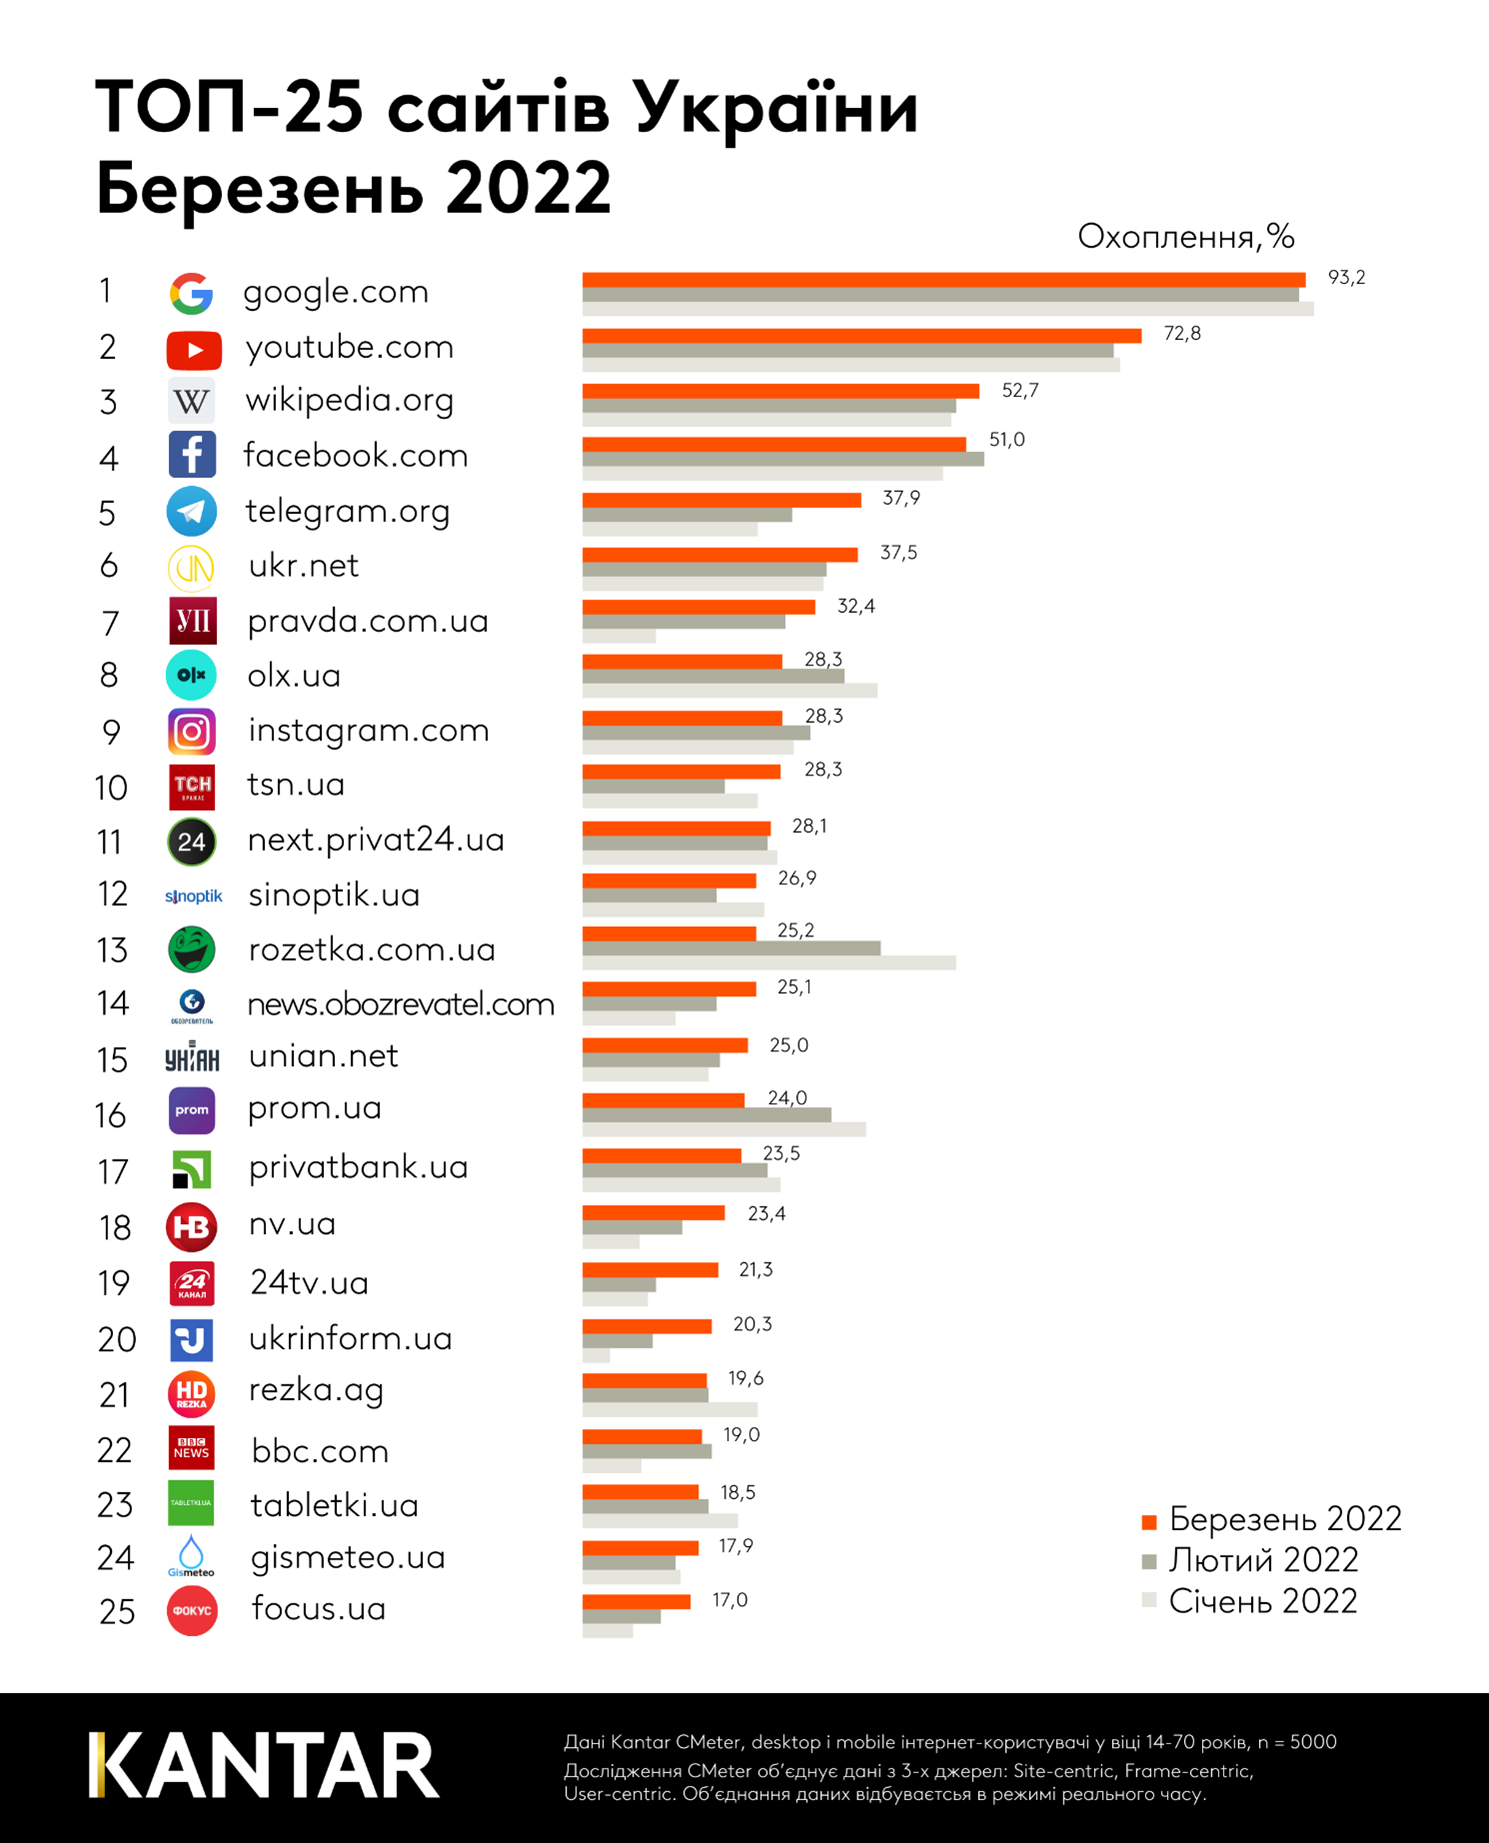 The most popular sites March 2022 Kantar Ukraine